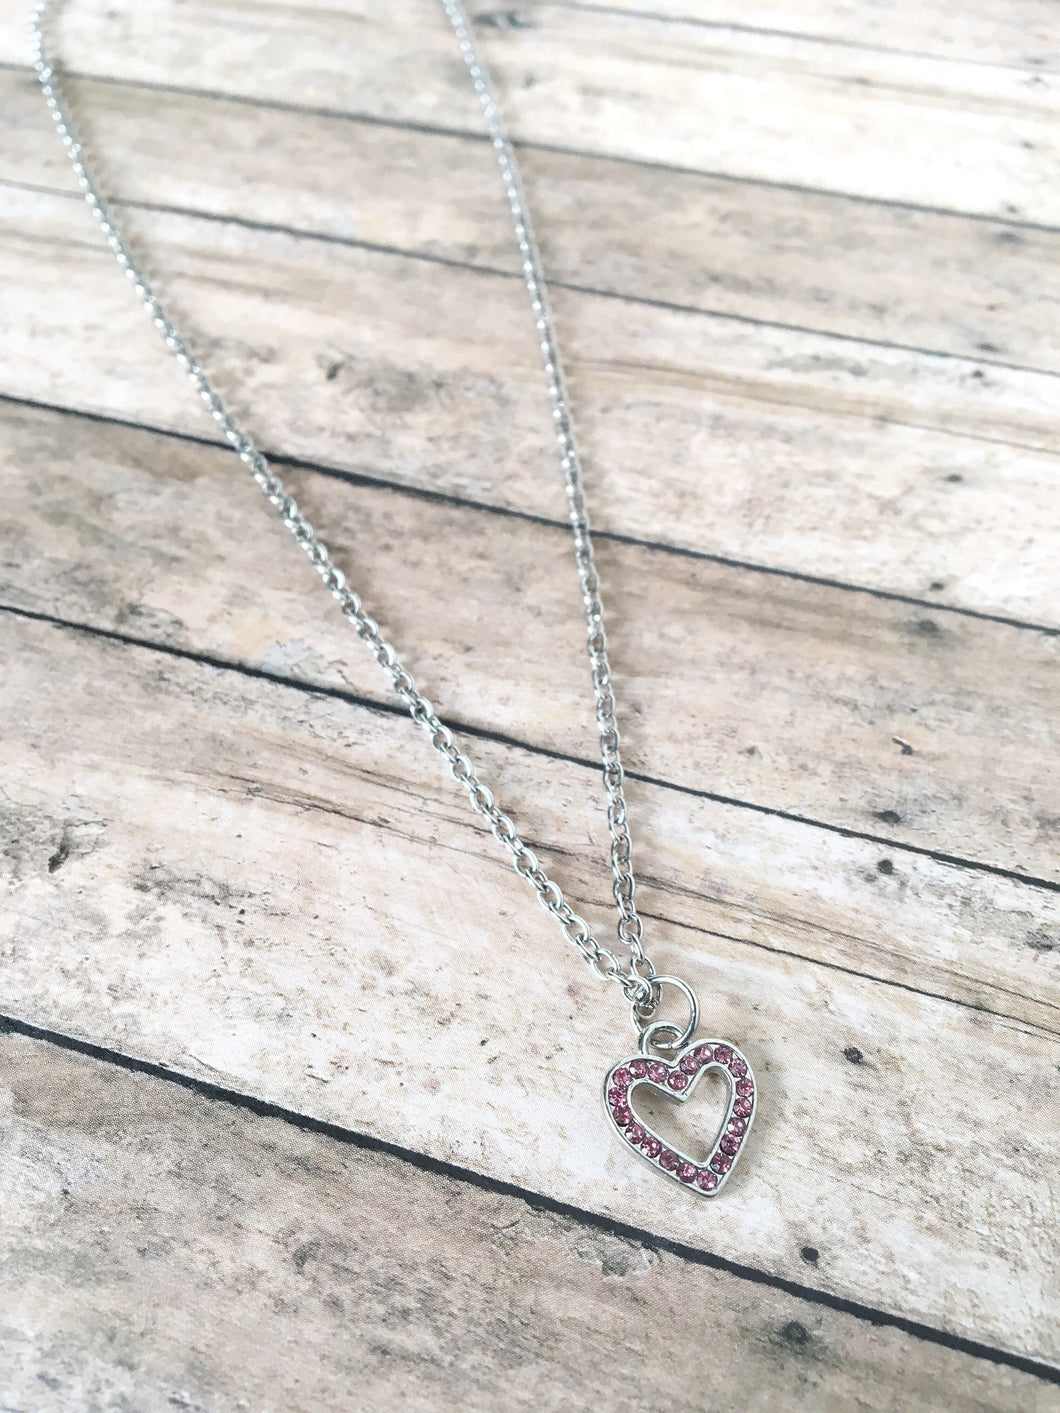 Small pink rhinestone heart necklace